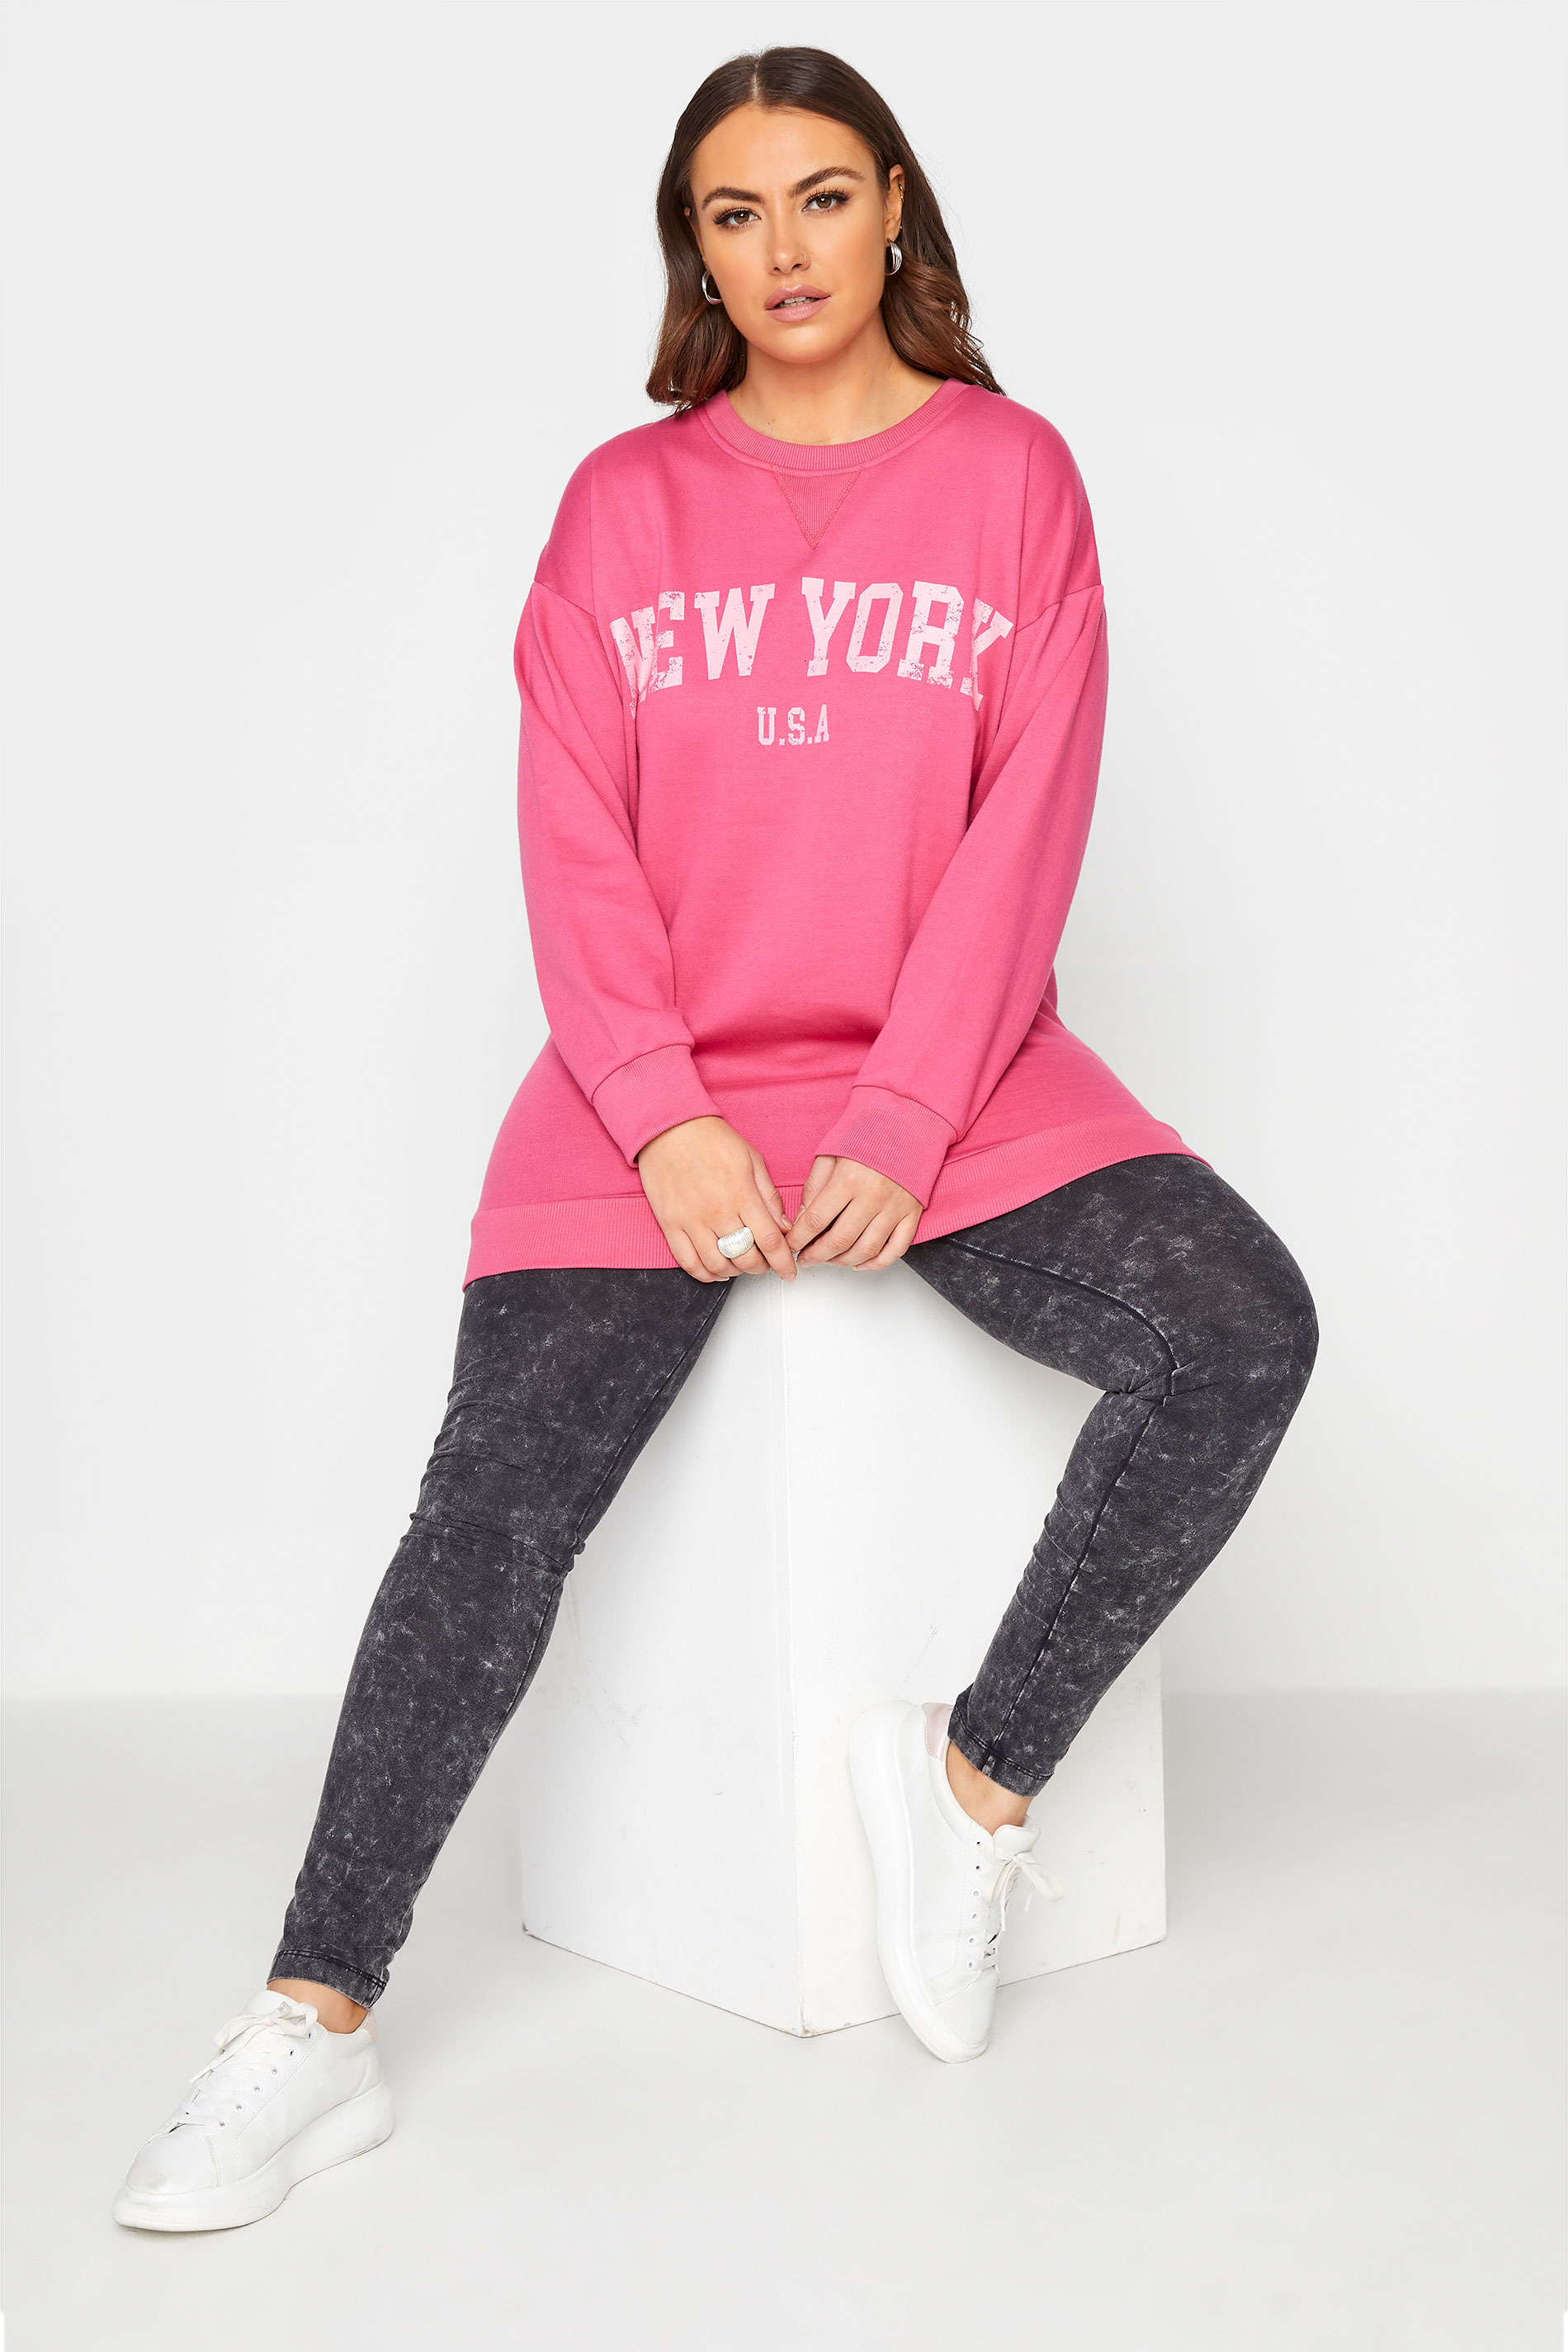 Grande taille  Pulls à Capuche, Sweatshirts & Polaires Grande taille  Sweatshirts | Sweatshirt Rose Slogan 'New York' en Jersey - WI17882